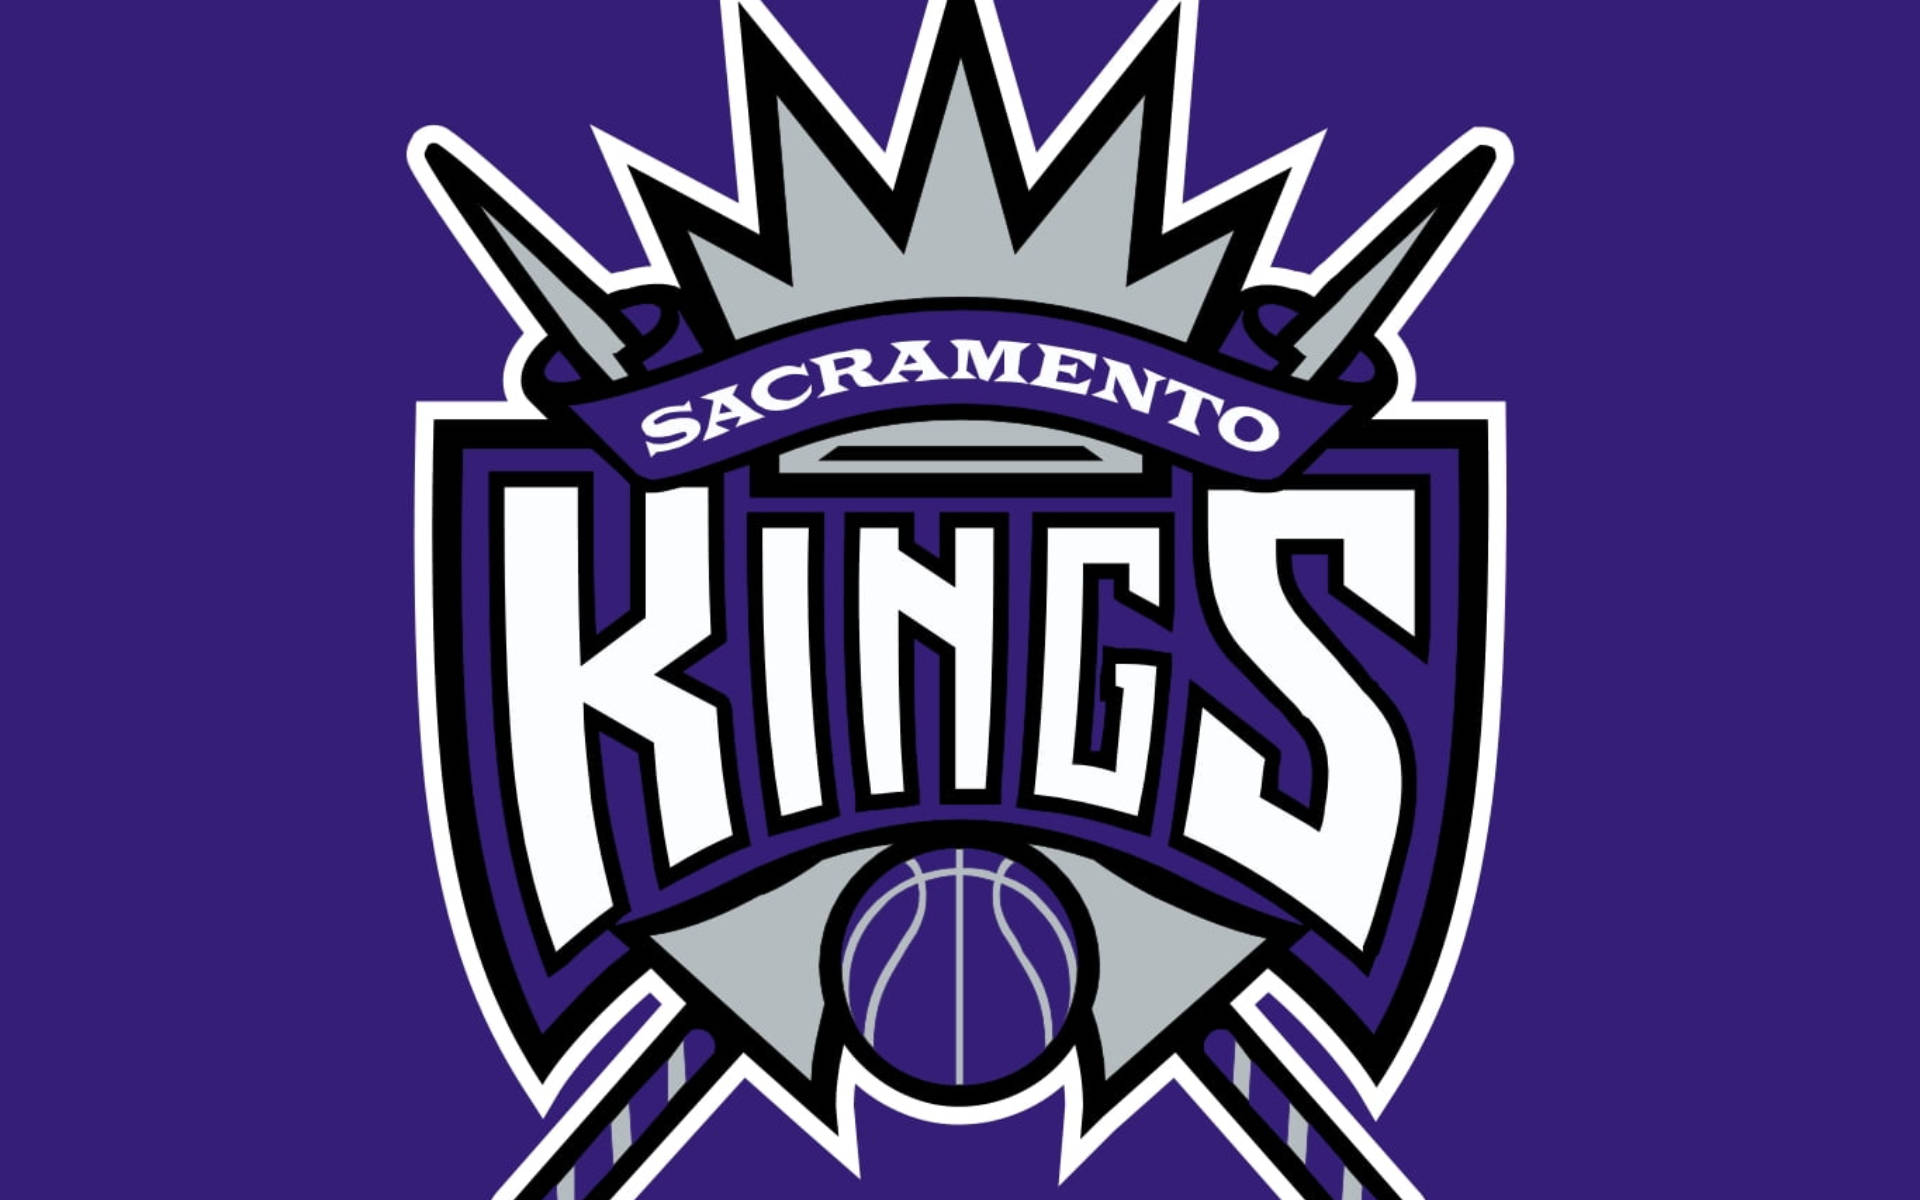 Sacramentokings-logo Auf Violett Wallpaper